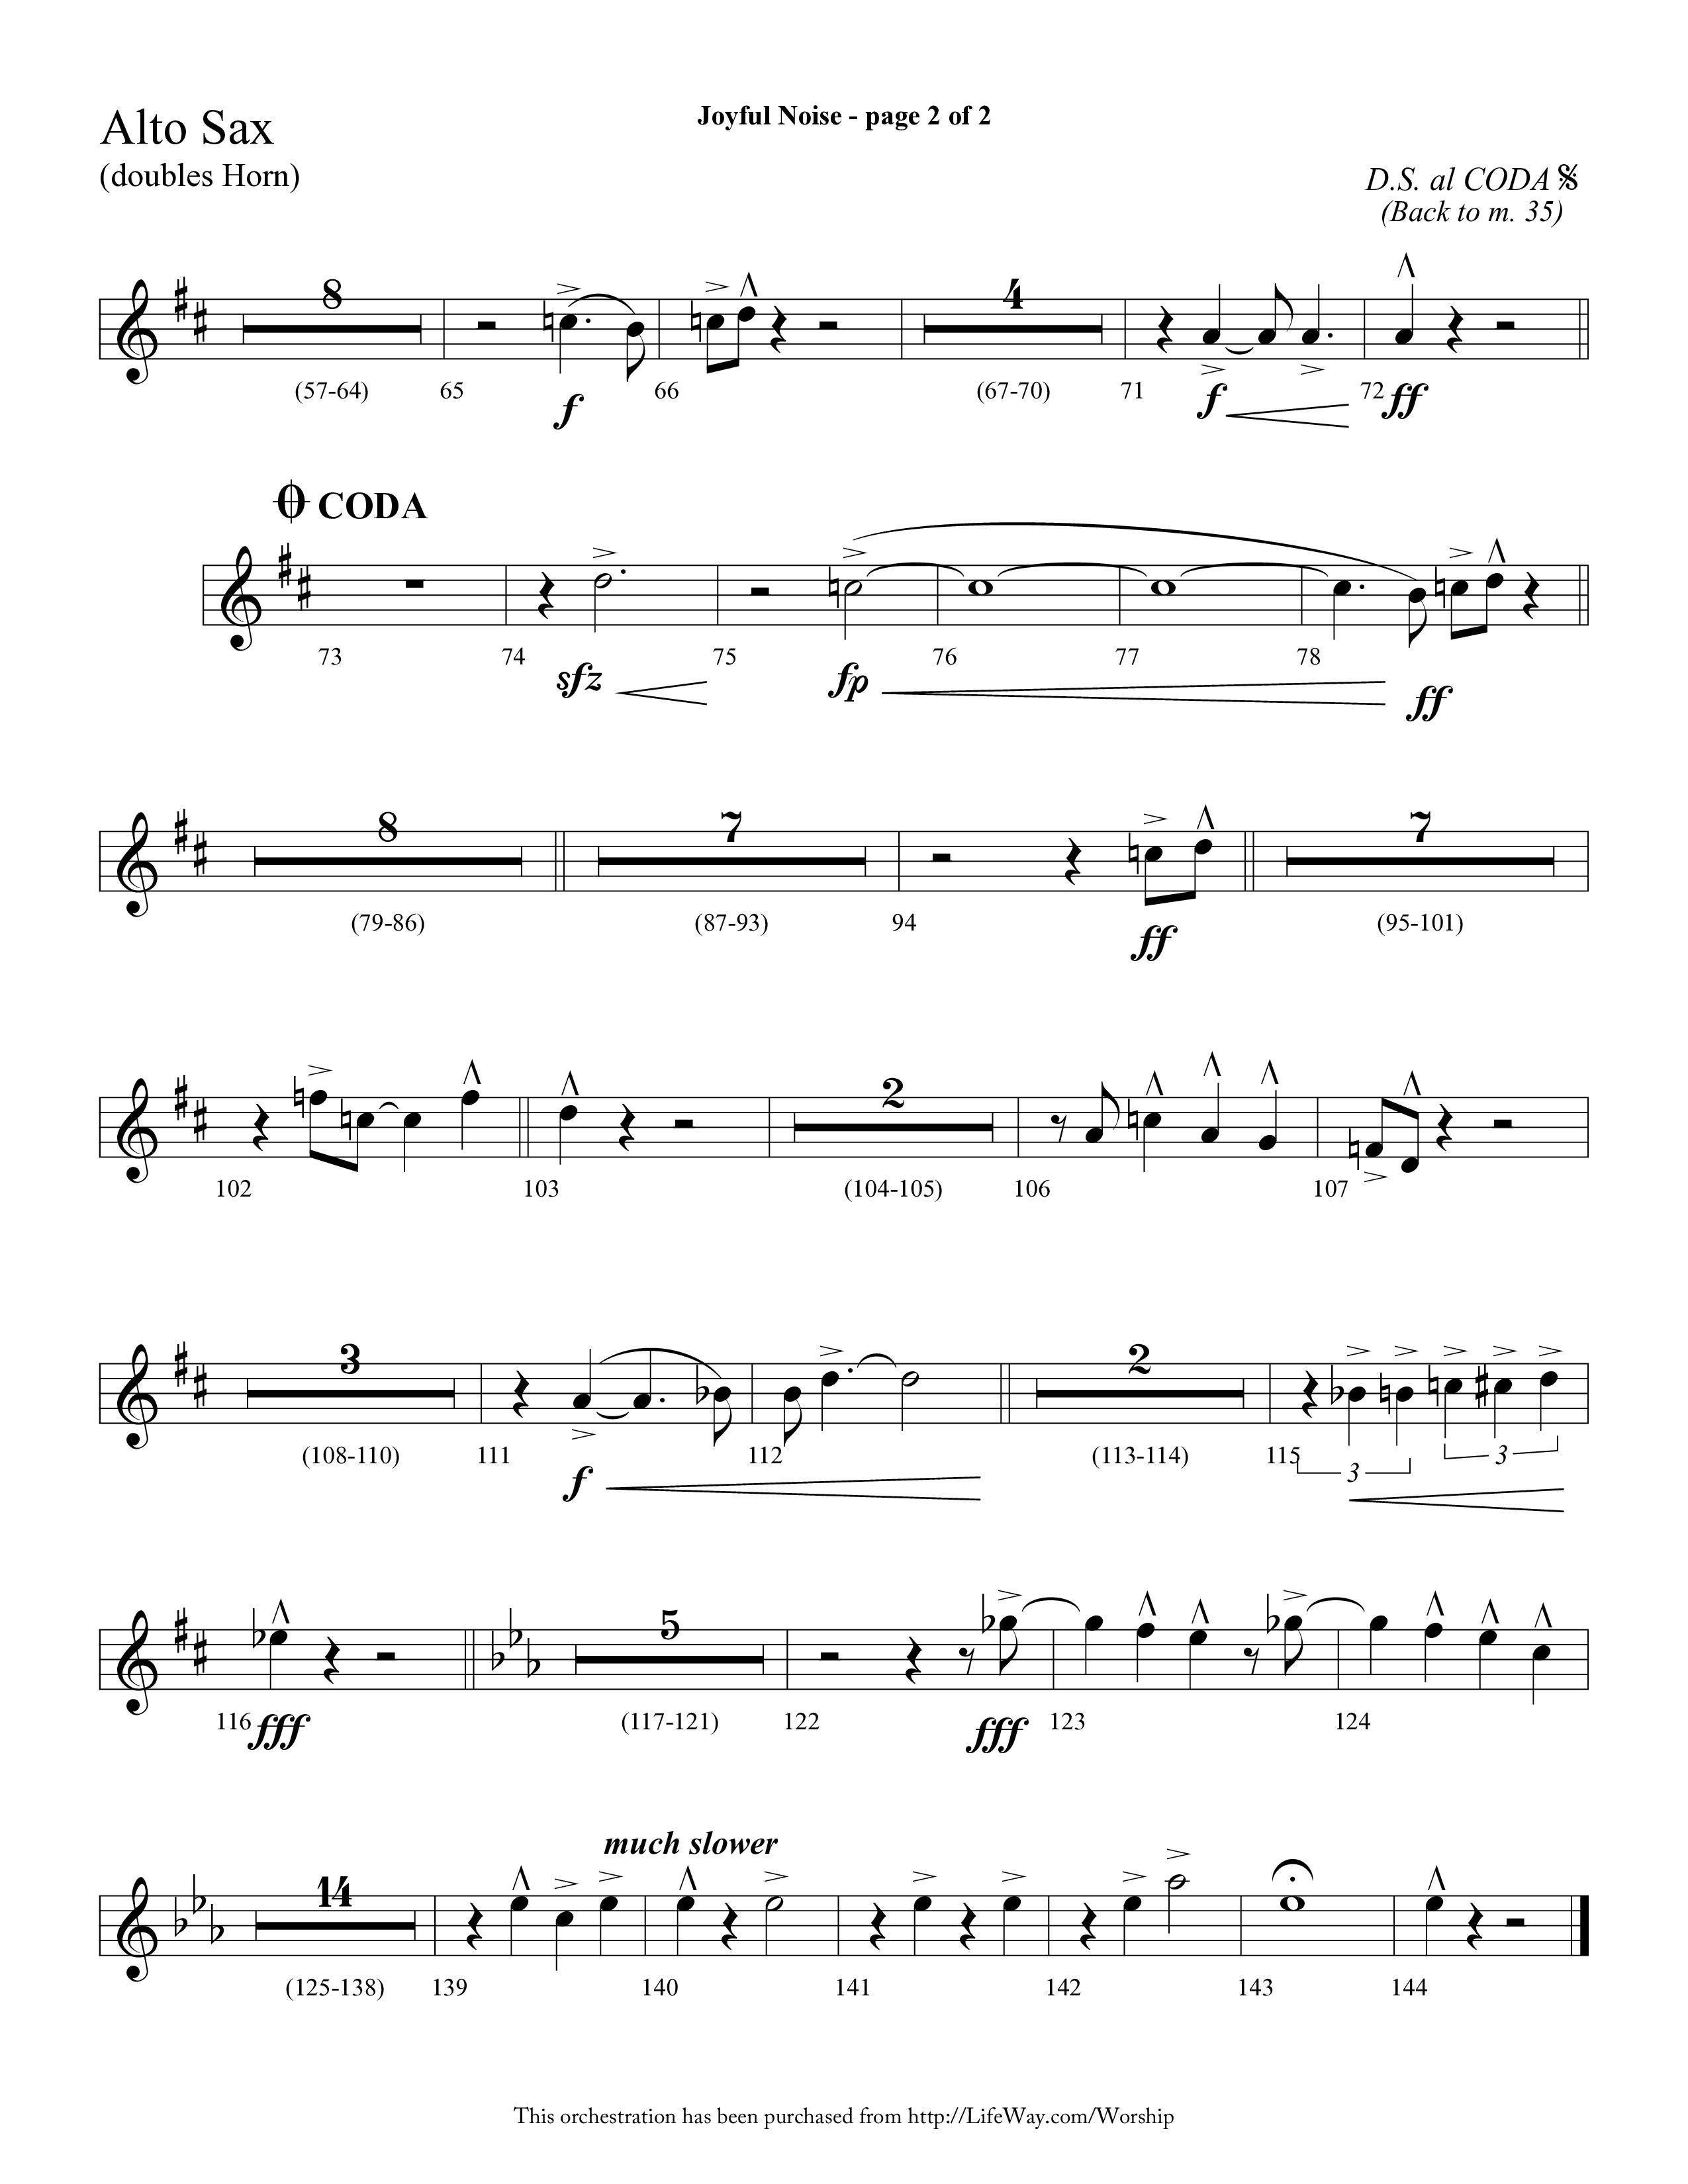 Joyful Noise (Choral Anthem SATB) Alto Sax (Lifeway Choral / Arr. Cliff Duren)